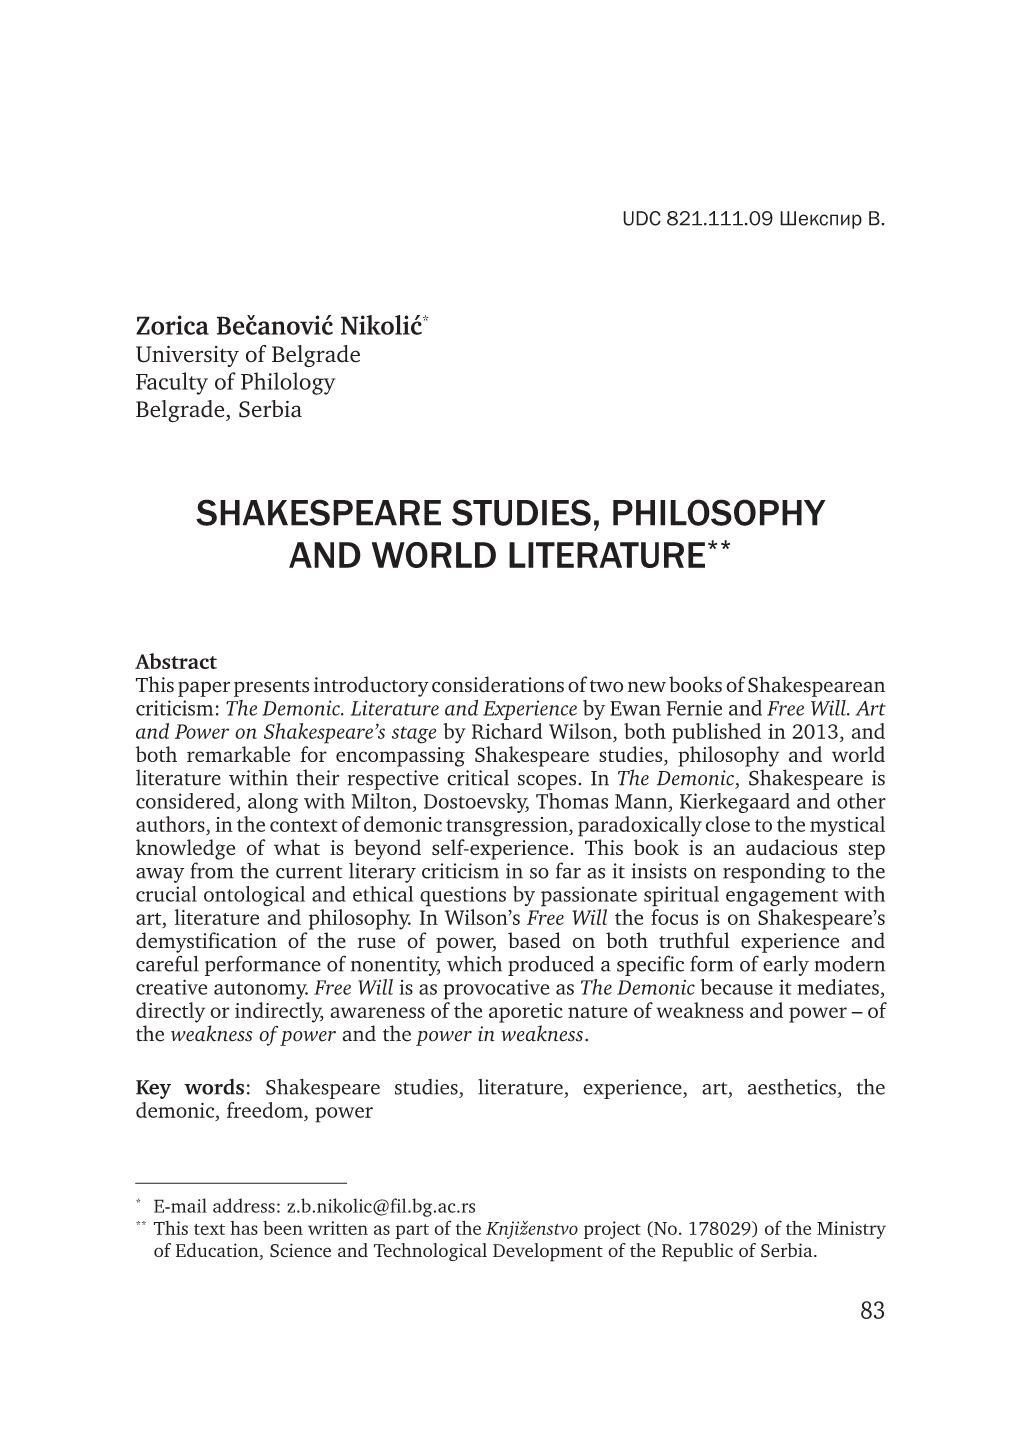 Shakespeare Studies, Philosophy and World Literature**